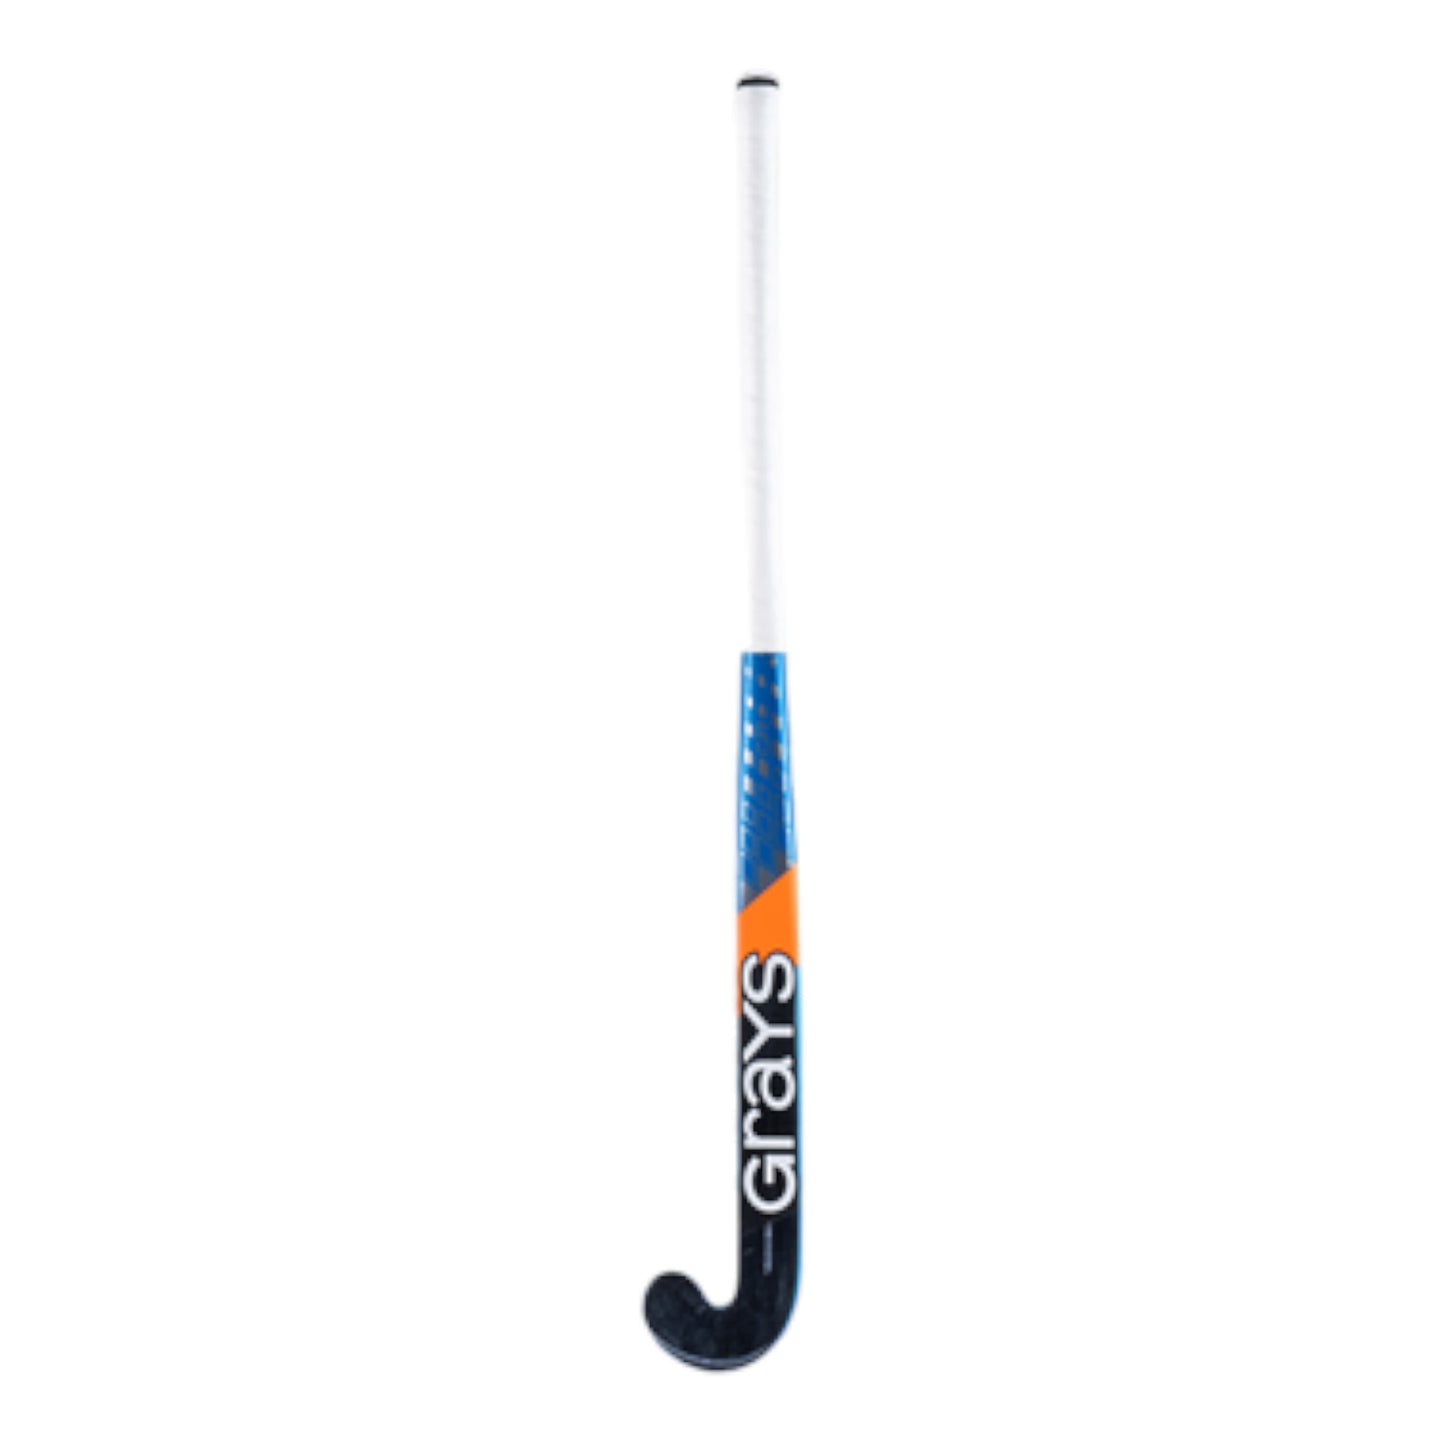 GR10000 Jumbow Composite Hockey Stick